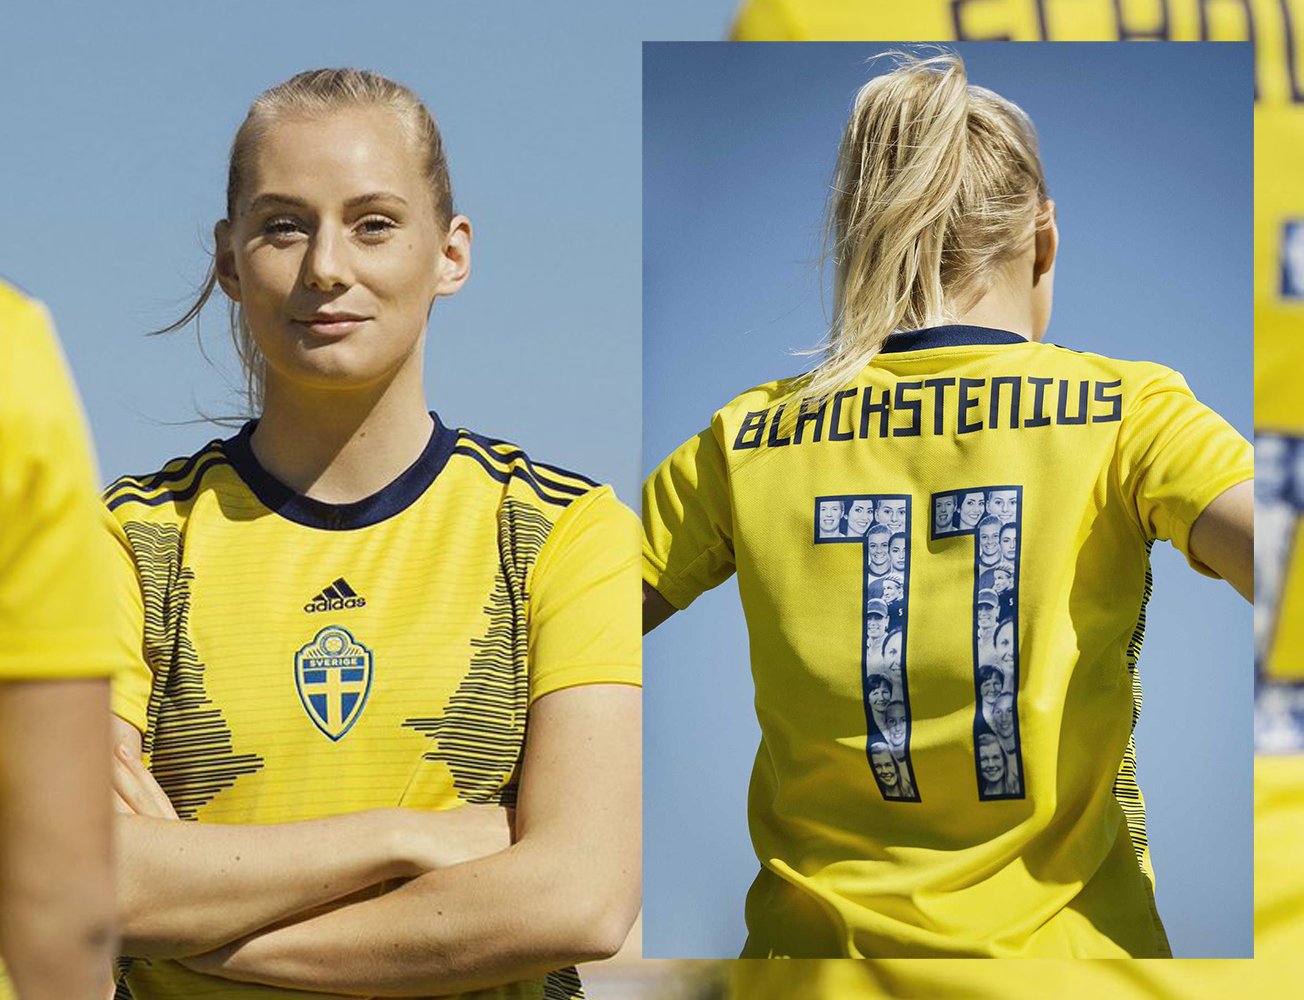 swede indumentaria deportiva femenina